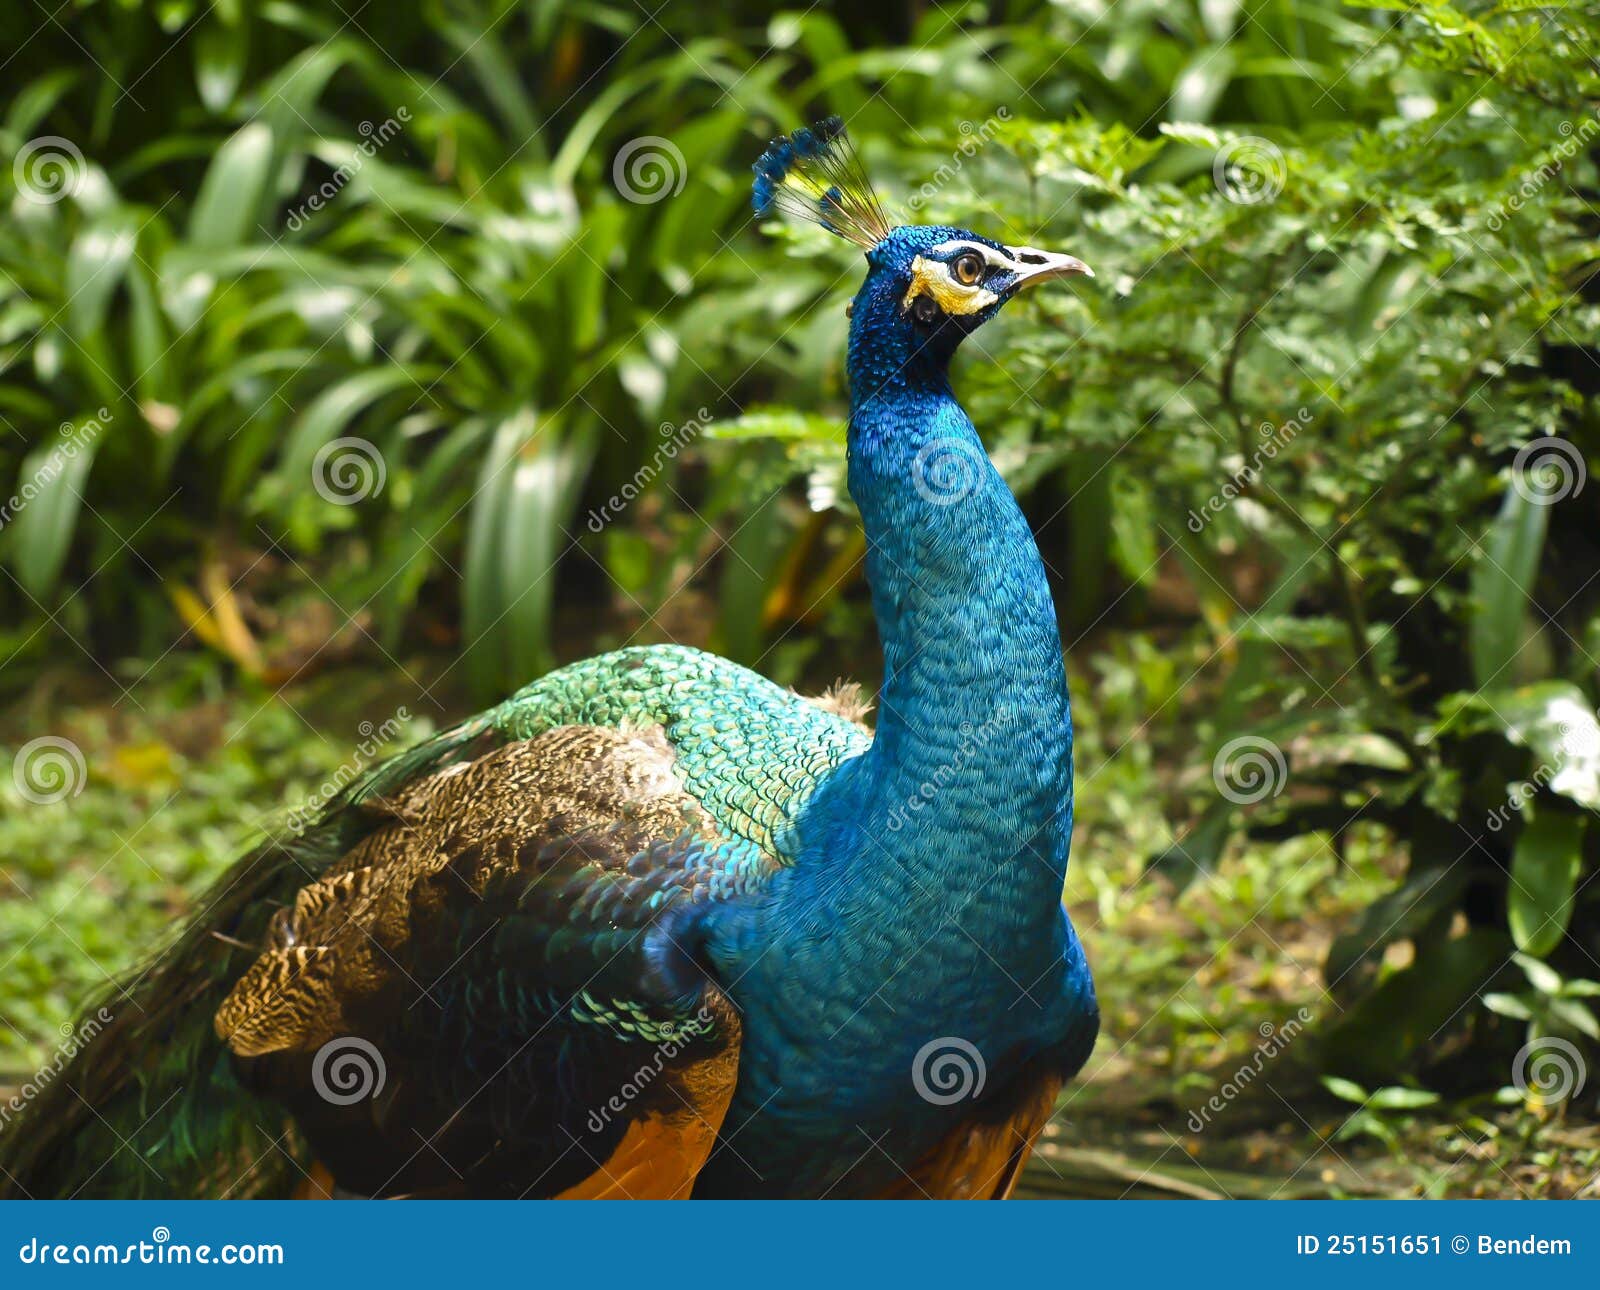 indian peafowl or blue peafowl (pavo cristatus)